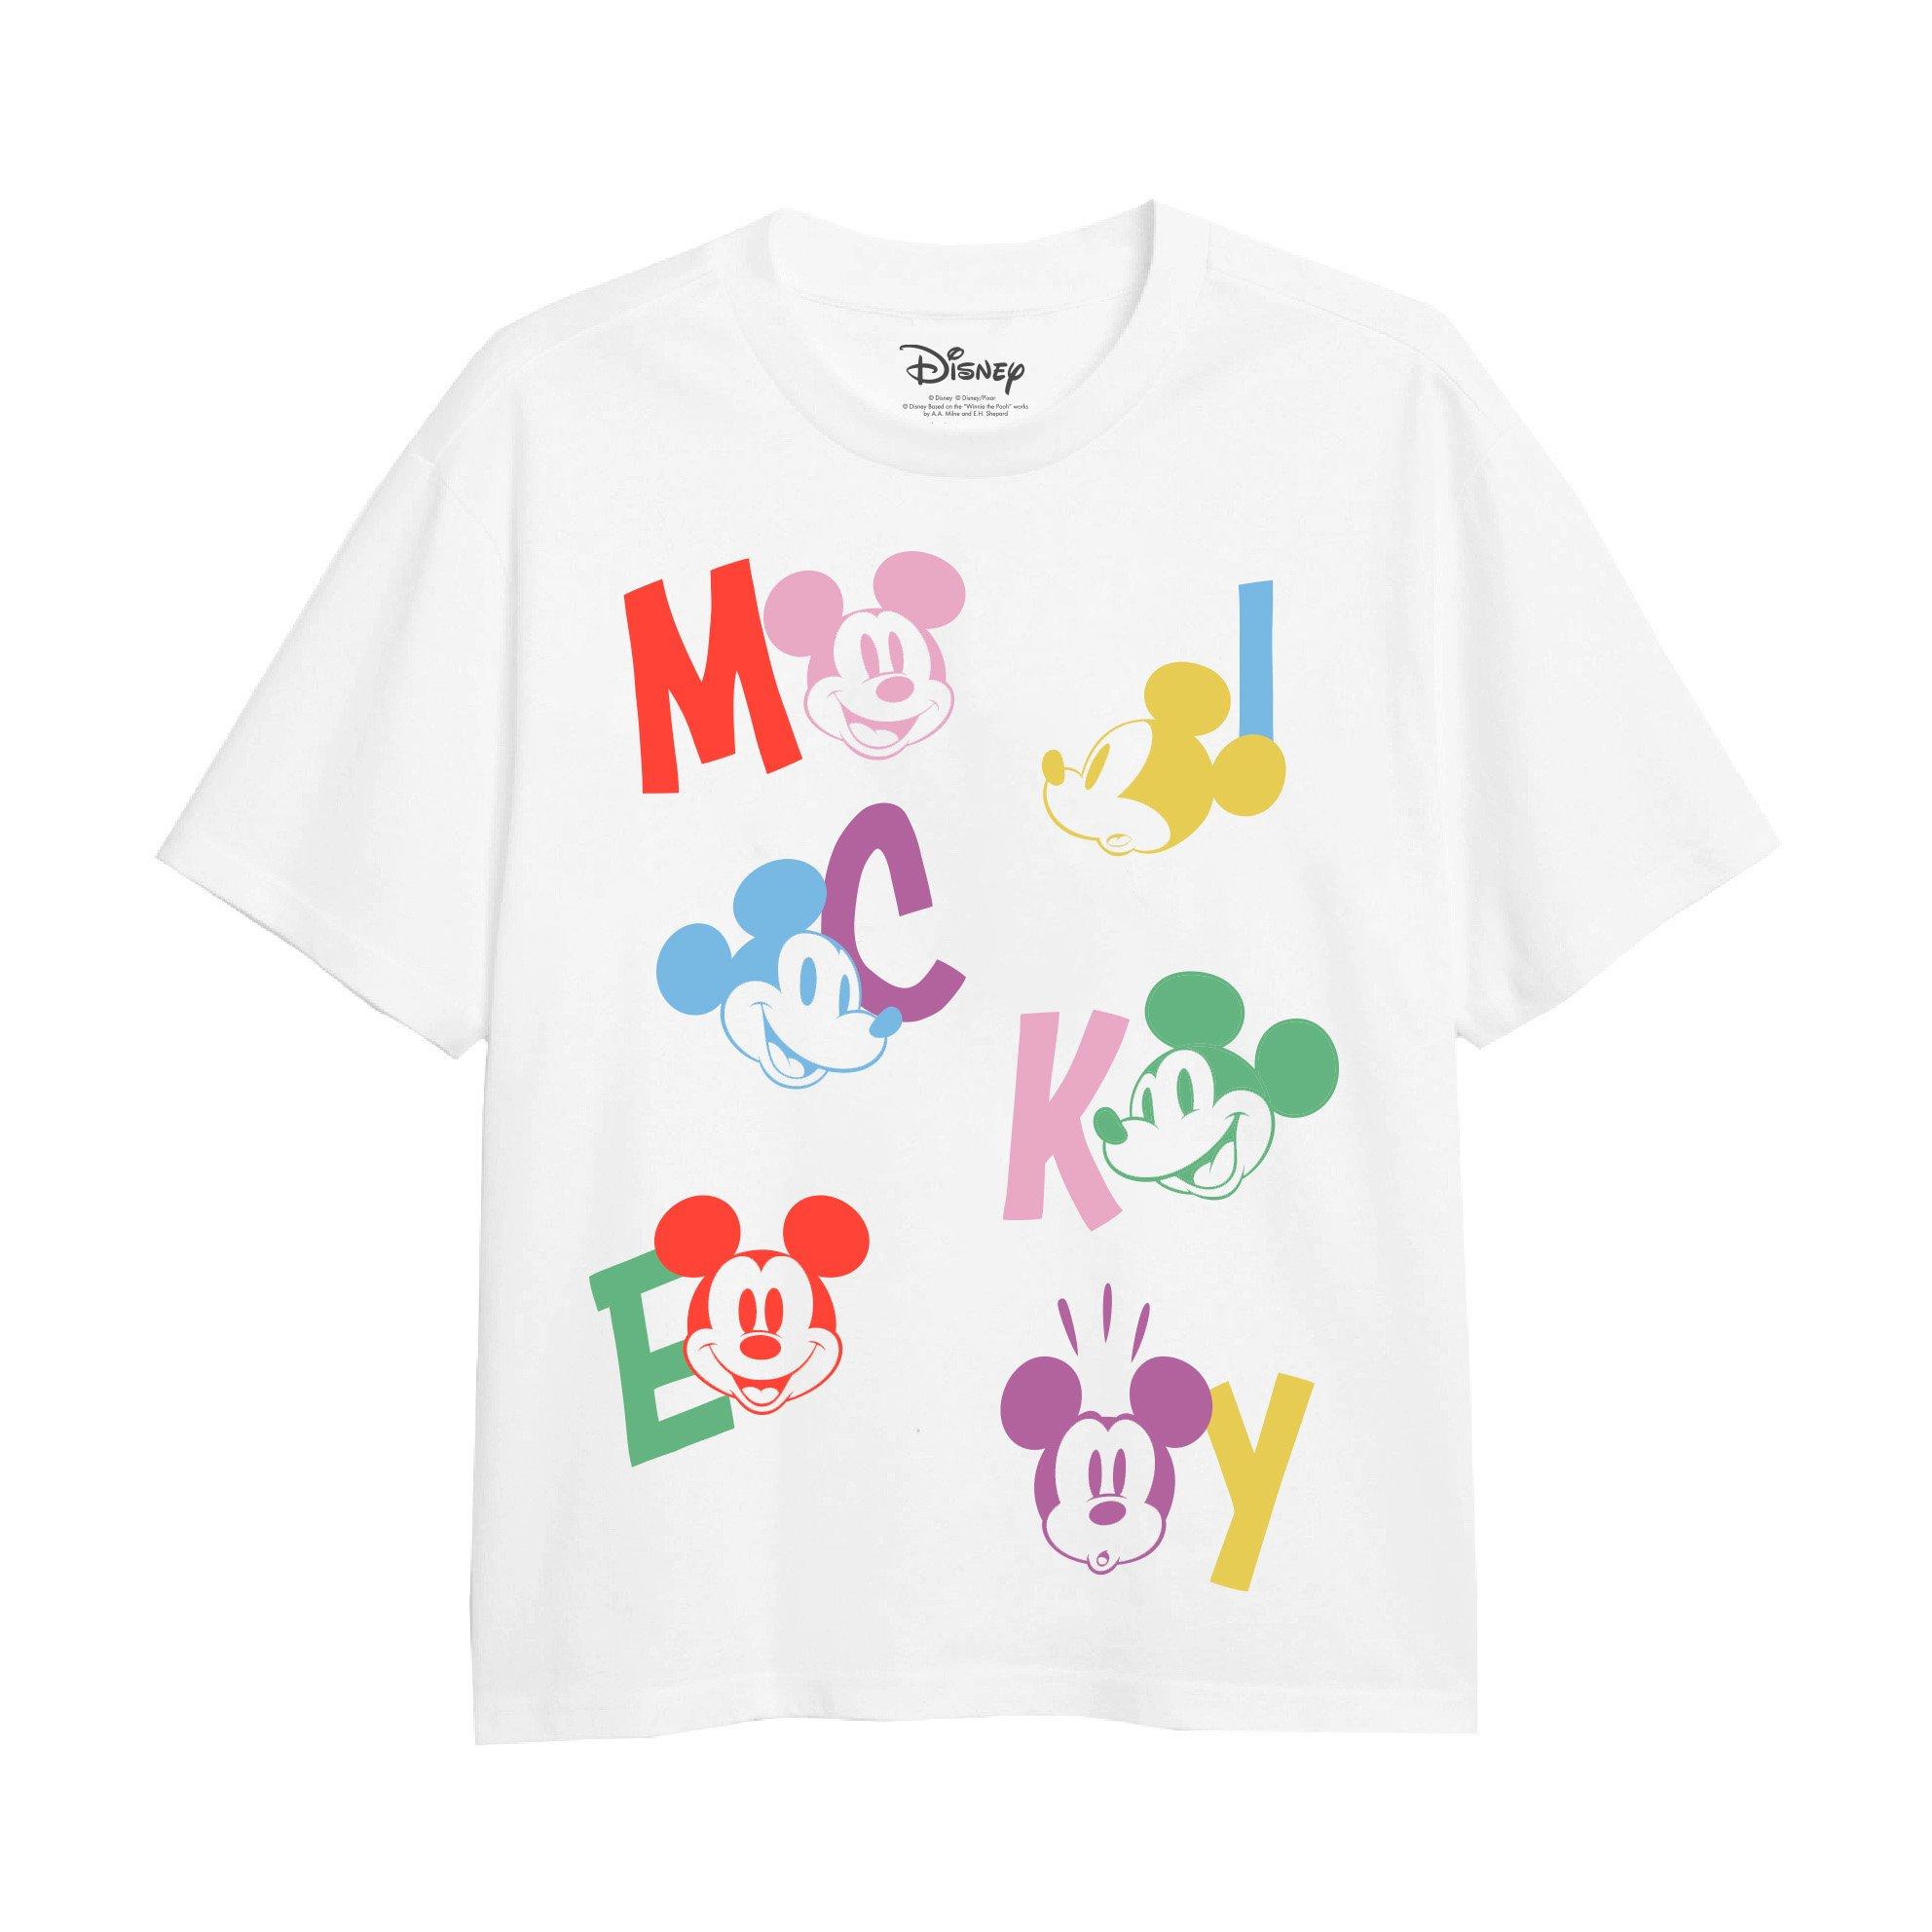 Футболка с буквами Микки Мауса Disney, белый футболка в ребруску с микки и минни маус disney zara красный